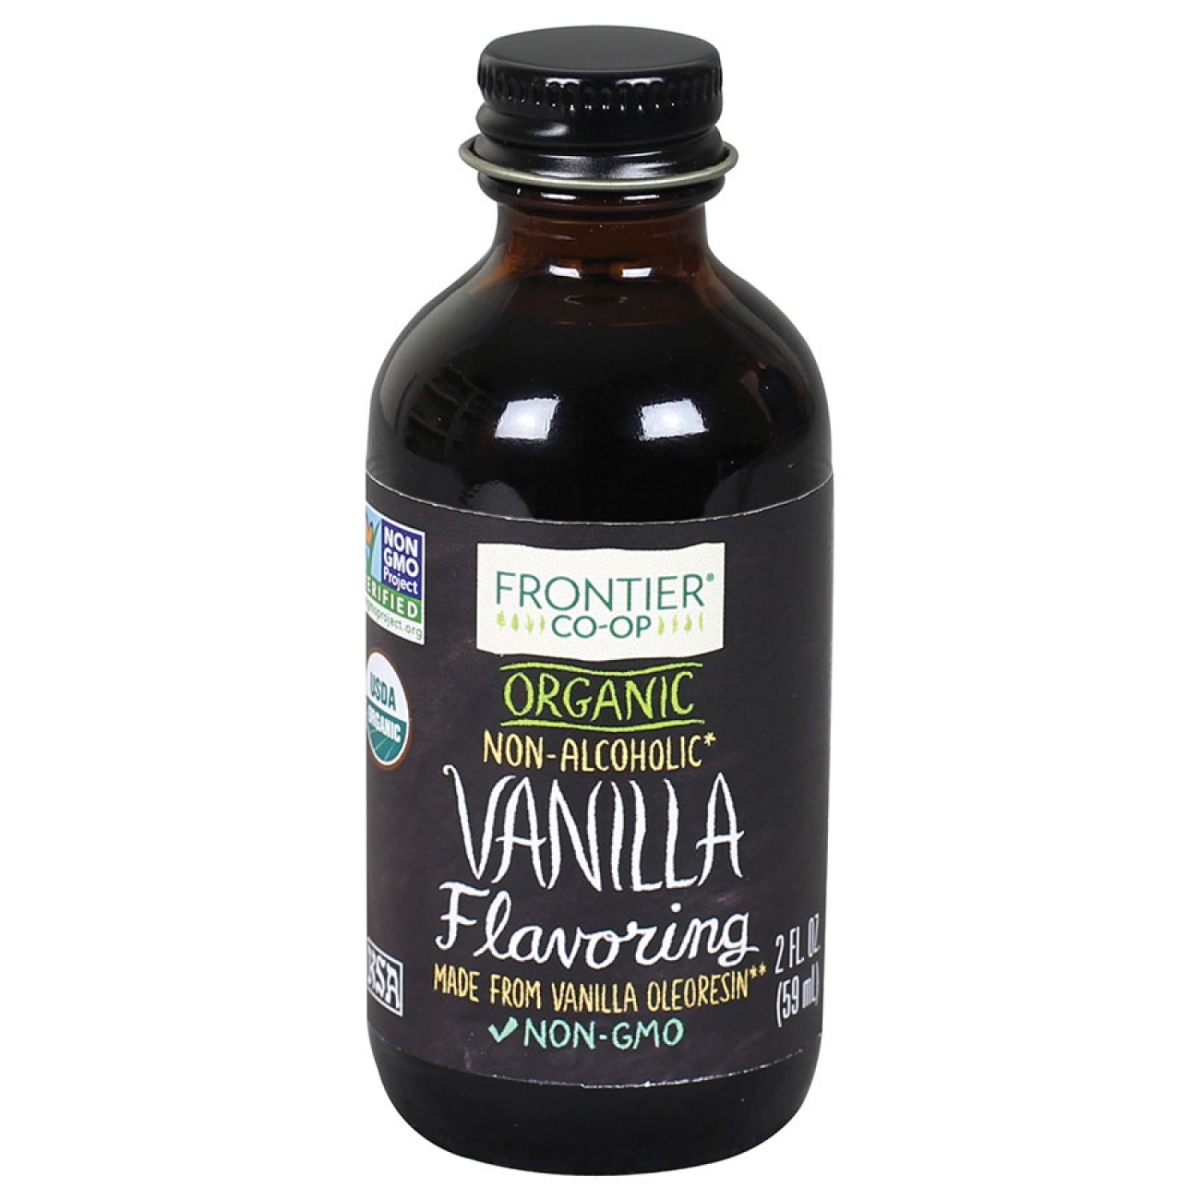 Picture of Frontier 23190 2 fl oz Organic Vanilla Flavoring Bottle